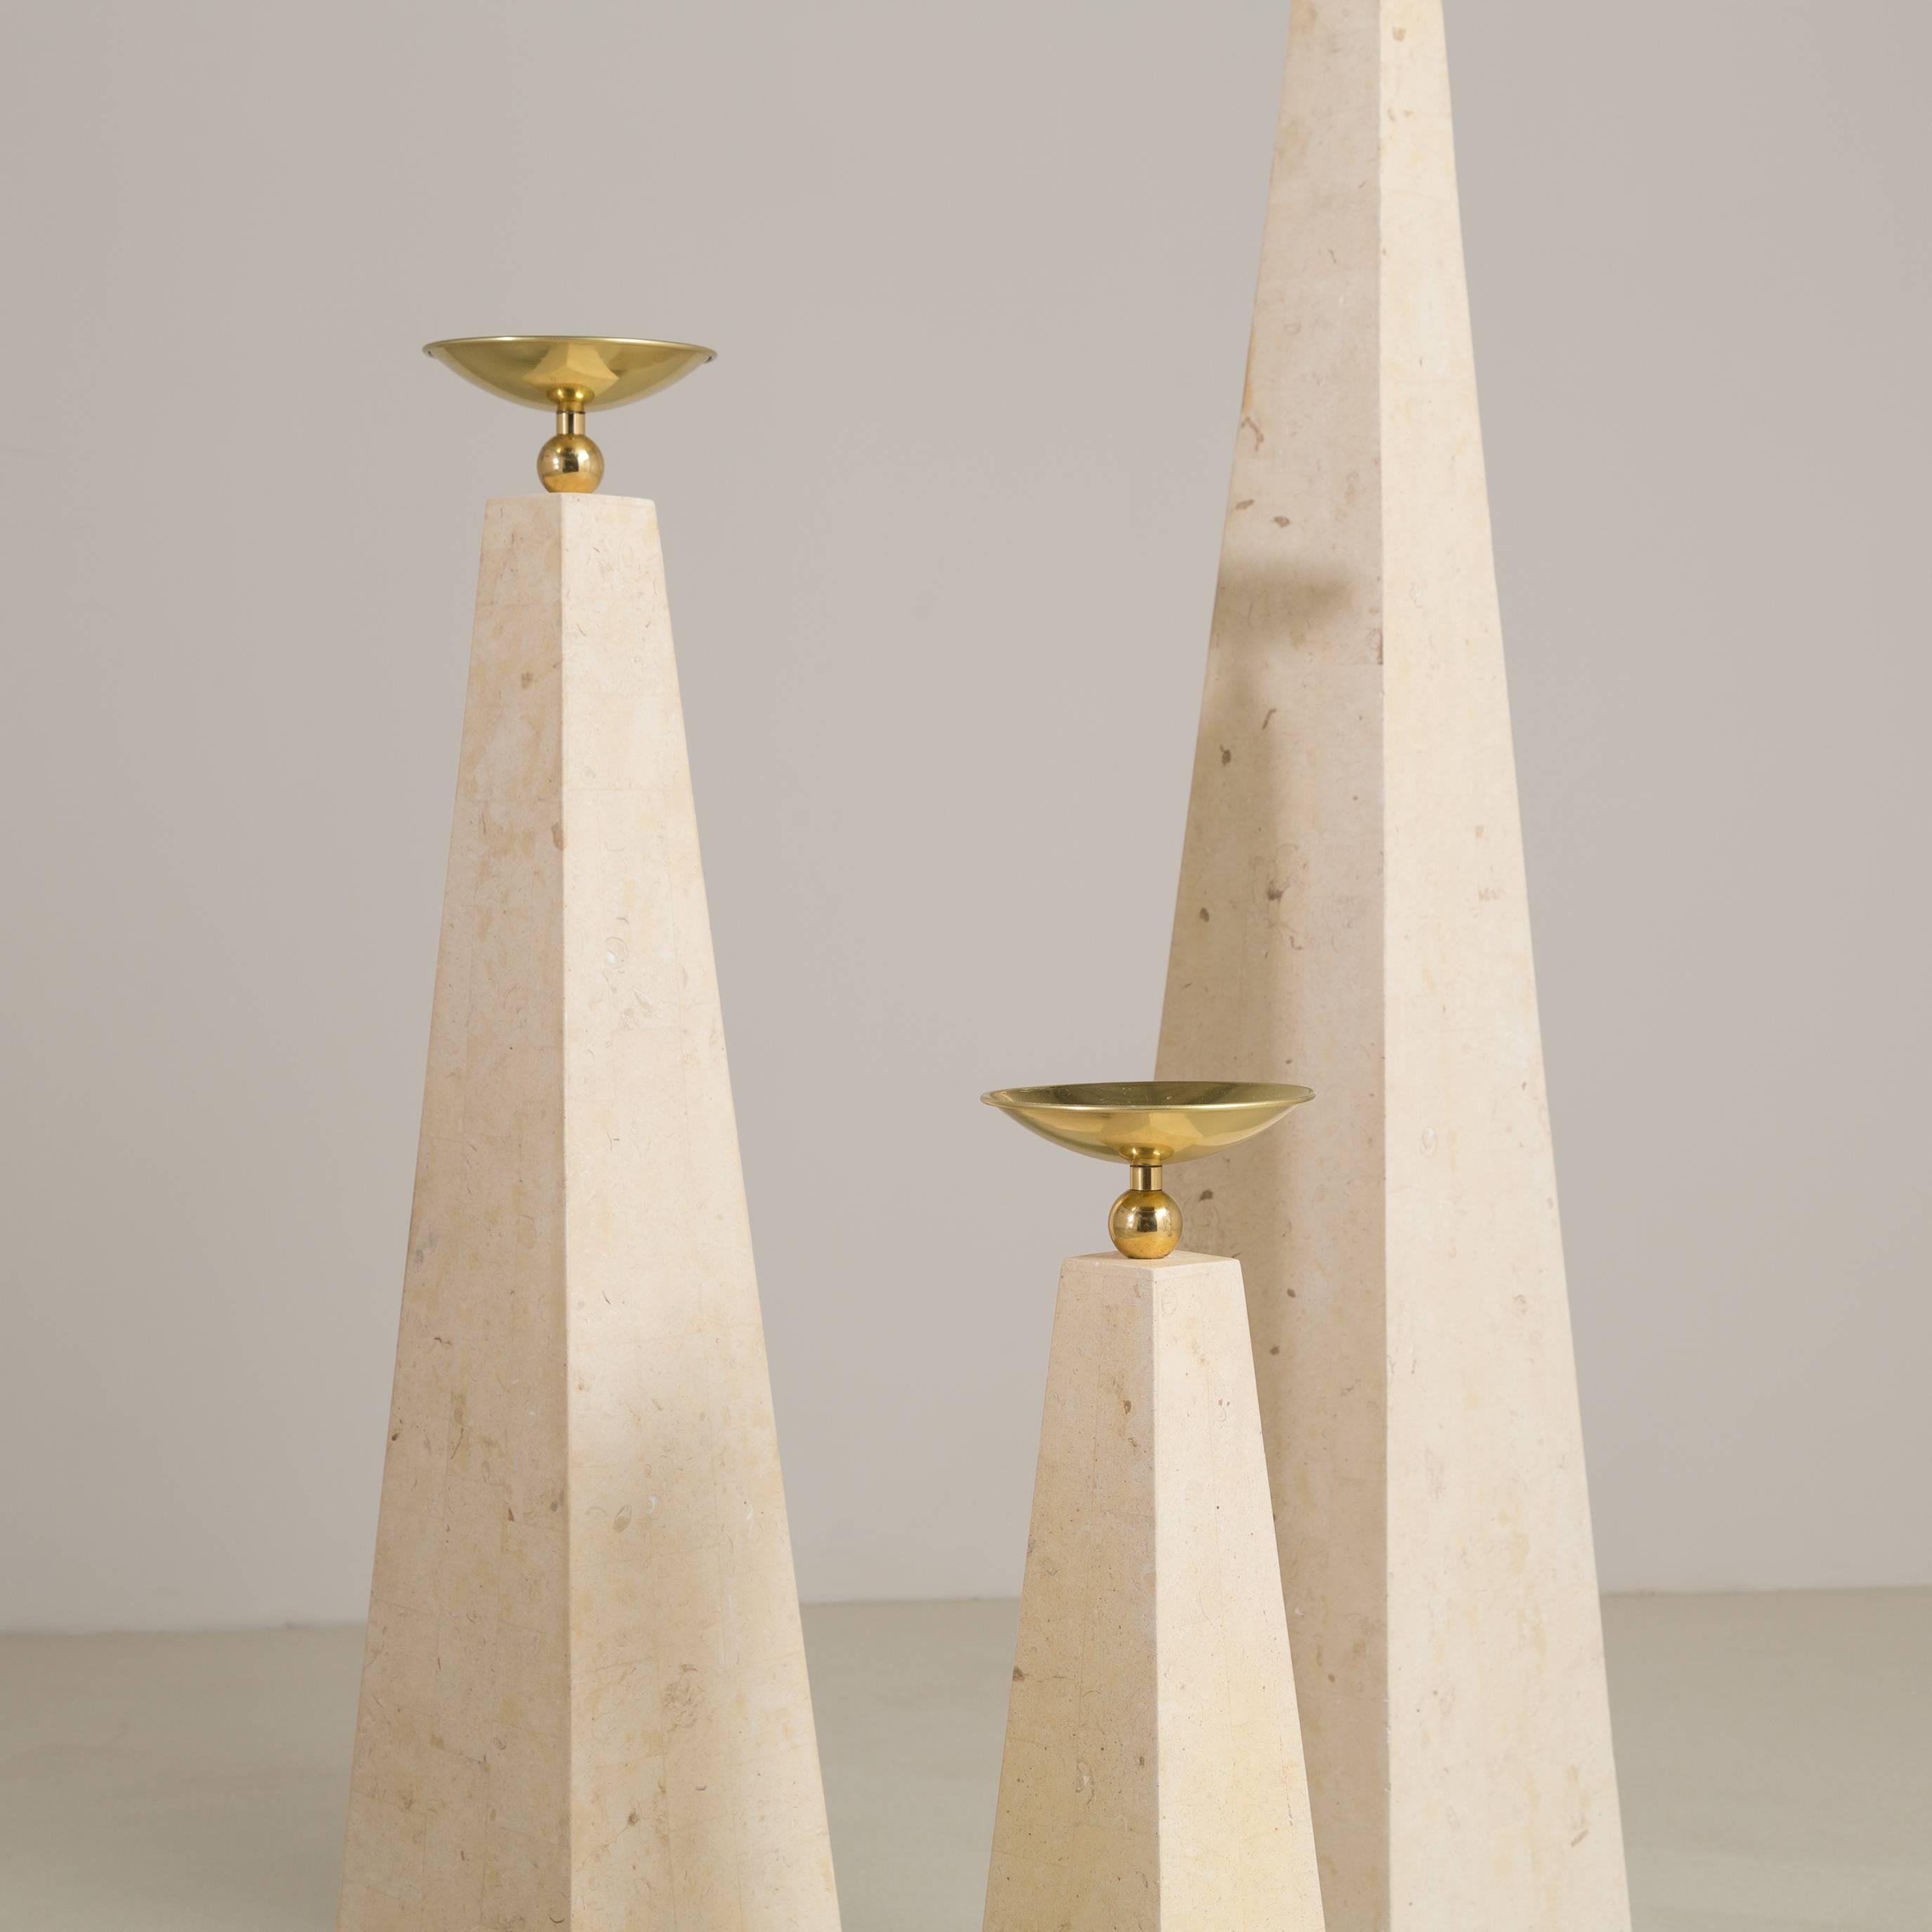 A set of three Maitland Smith designed stone veneered obelisk with brassed metal detail, 1980s.

Medium H 96cm, W 20cm, D 20cm.
Small H 65cm, W 16cm, D 16cm.
